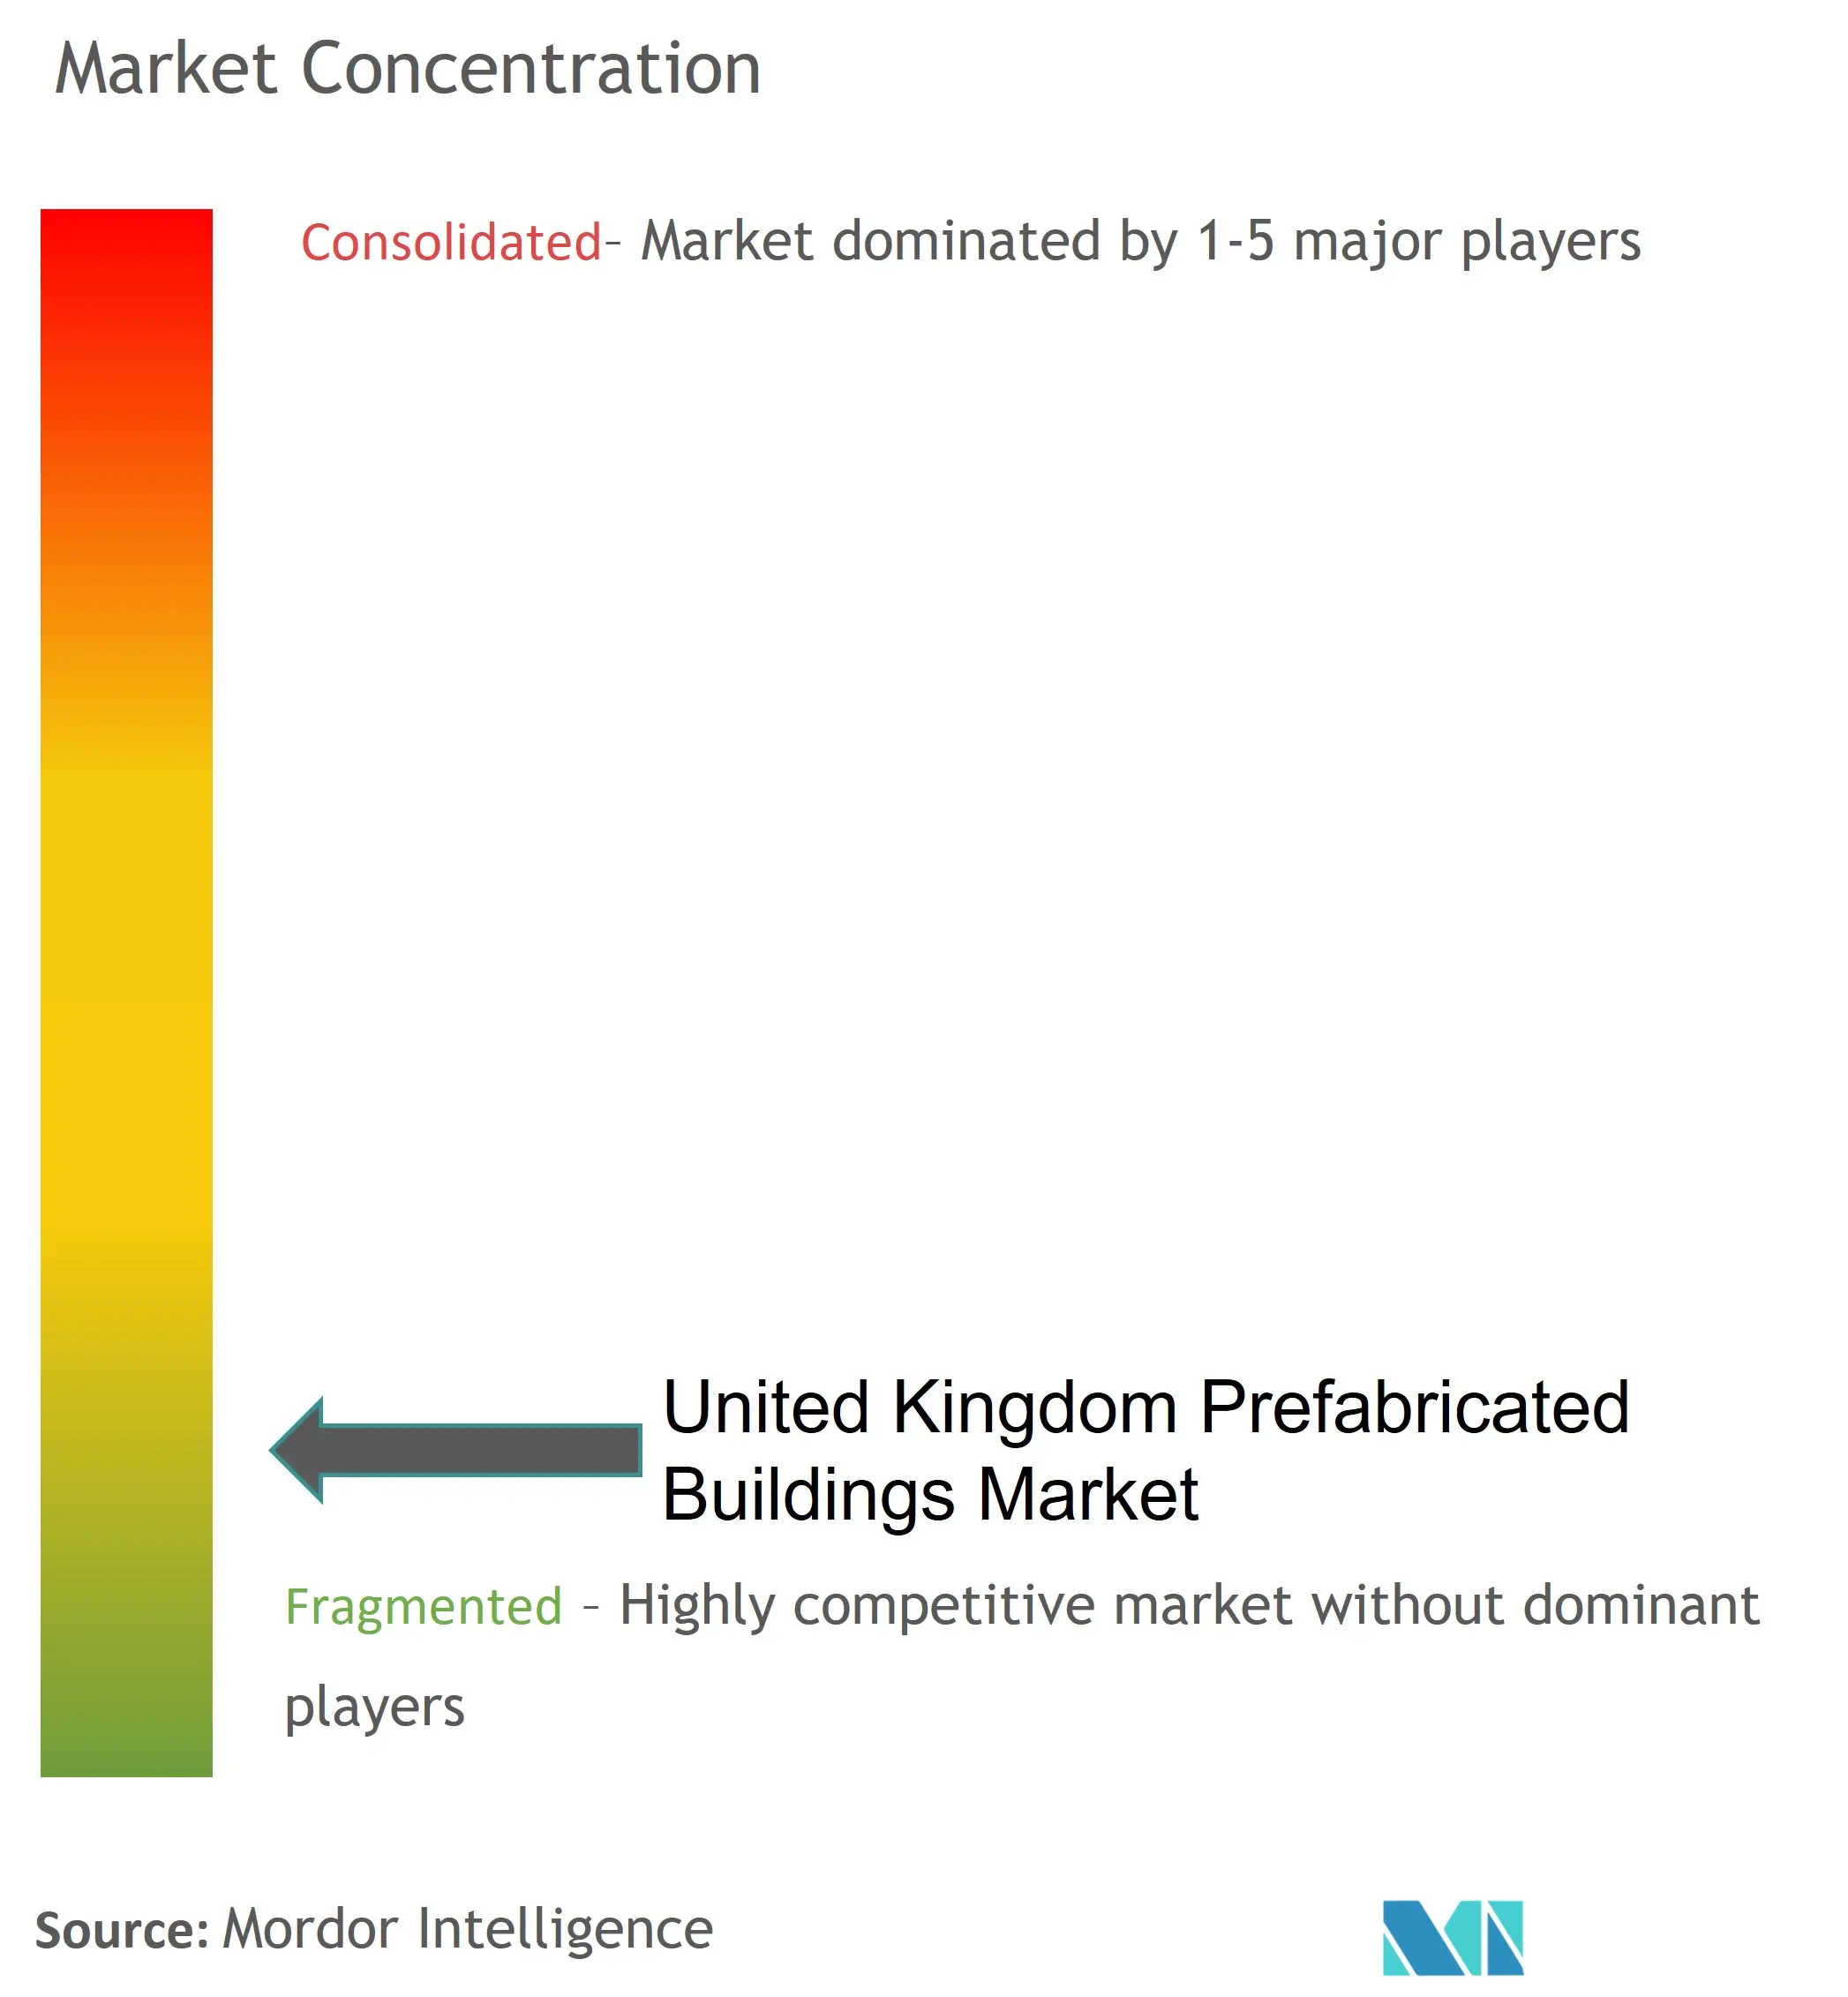 United Kingdom Prefabricated Buildings Market Concentration